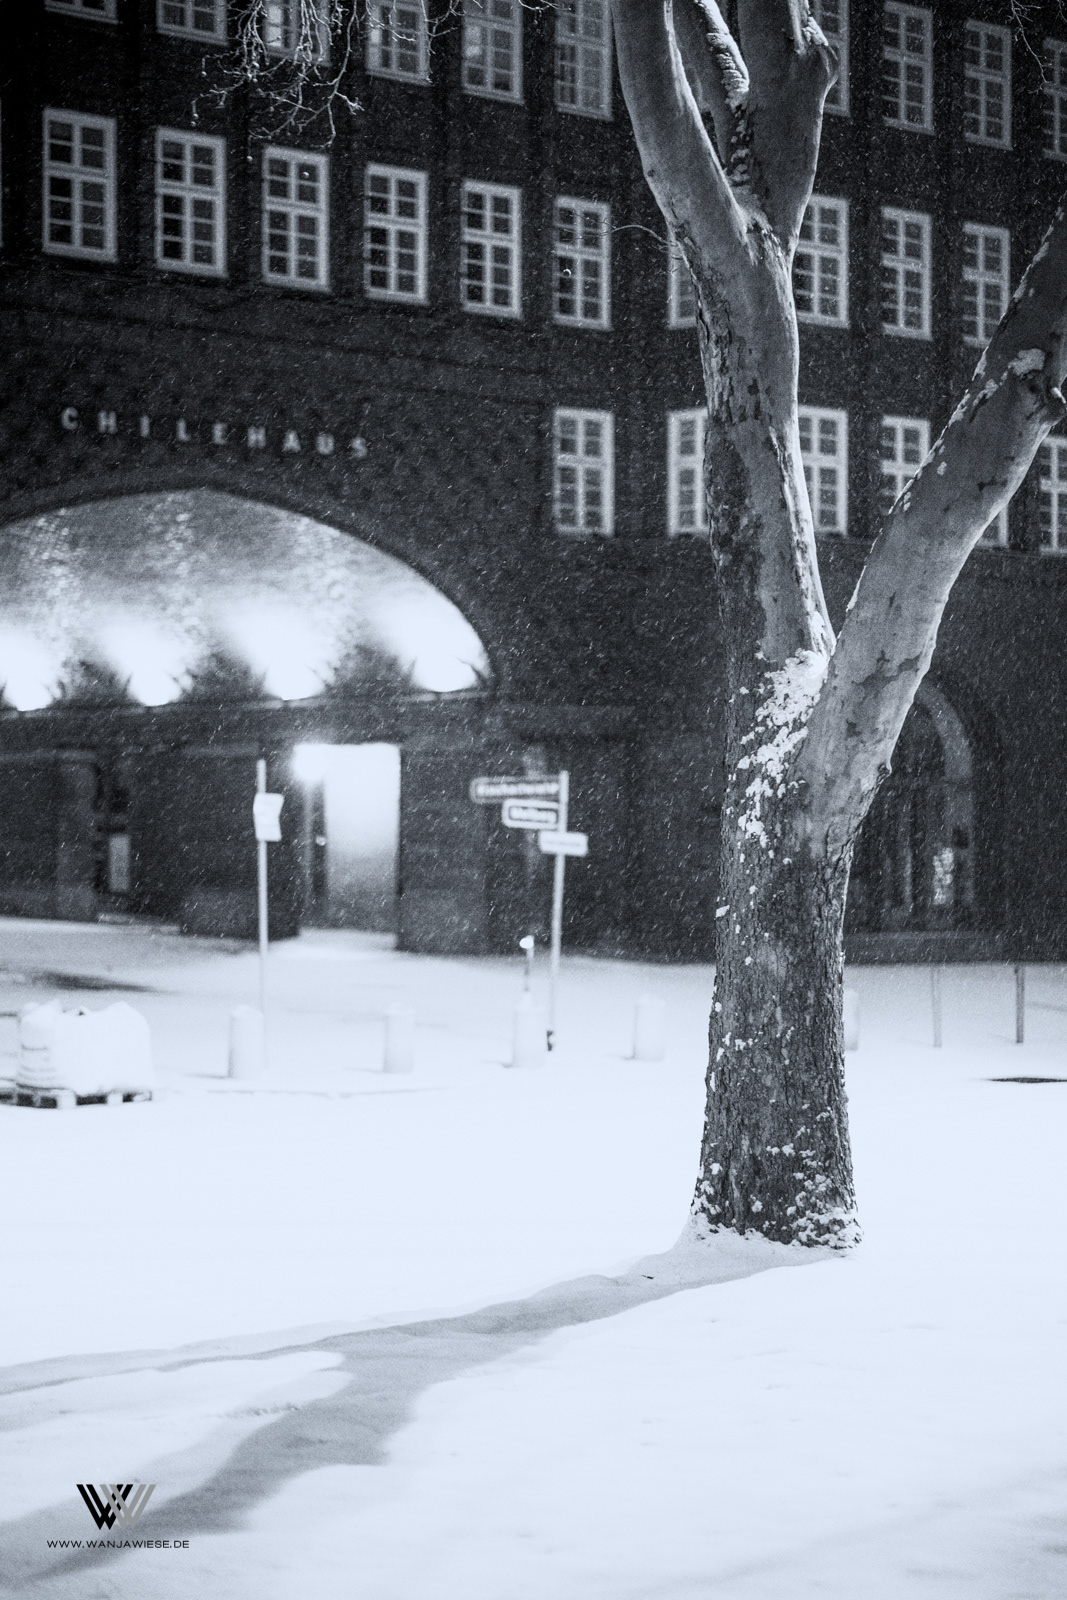 hamburg nightphotography snow snowinhamburg Speicherstadt streetphotography wanjawiese winter UNESCO unescoworldheritage